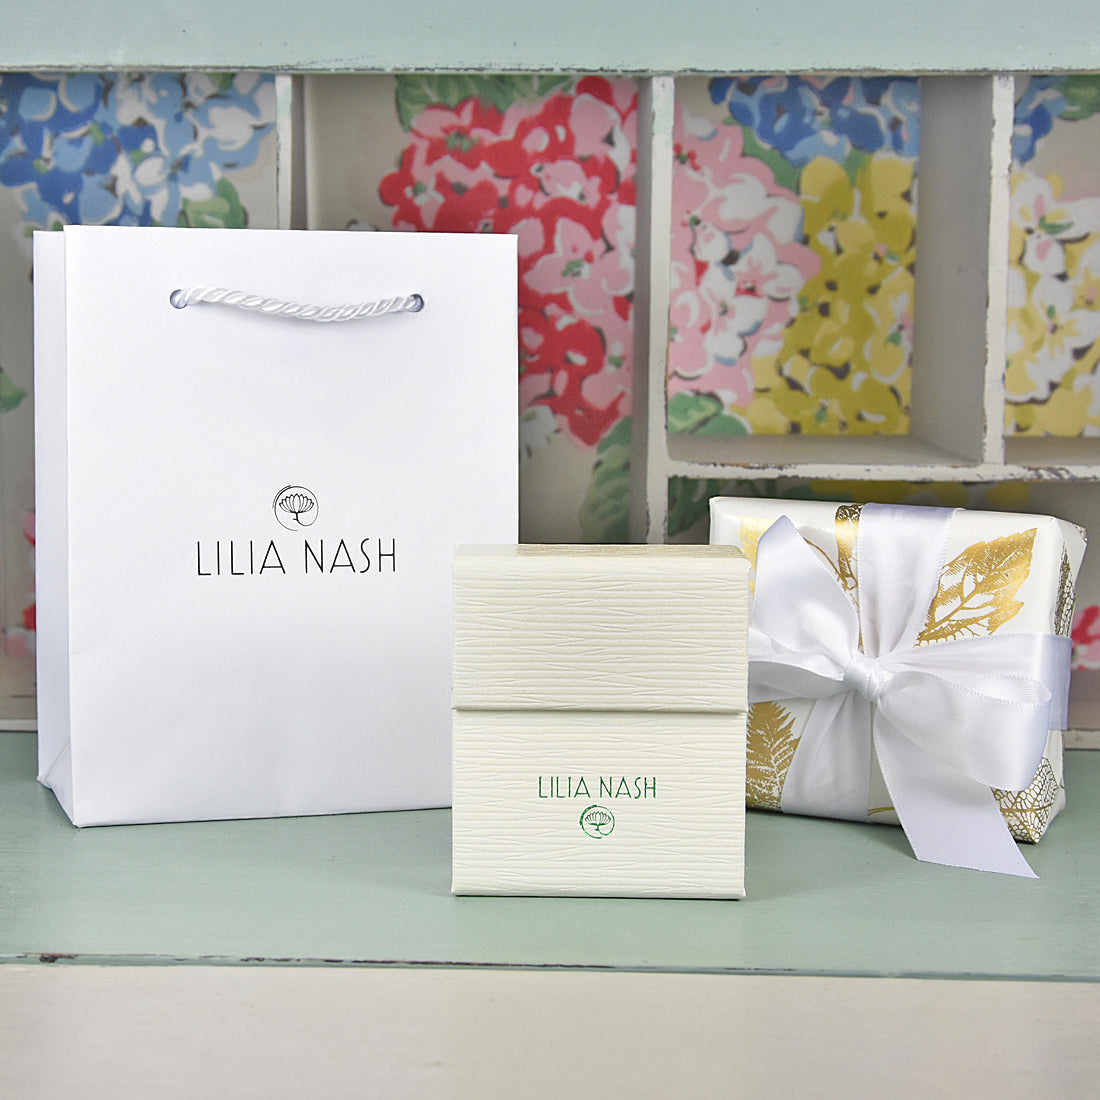 Lilia Nash Packaging